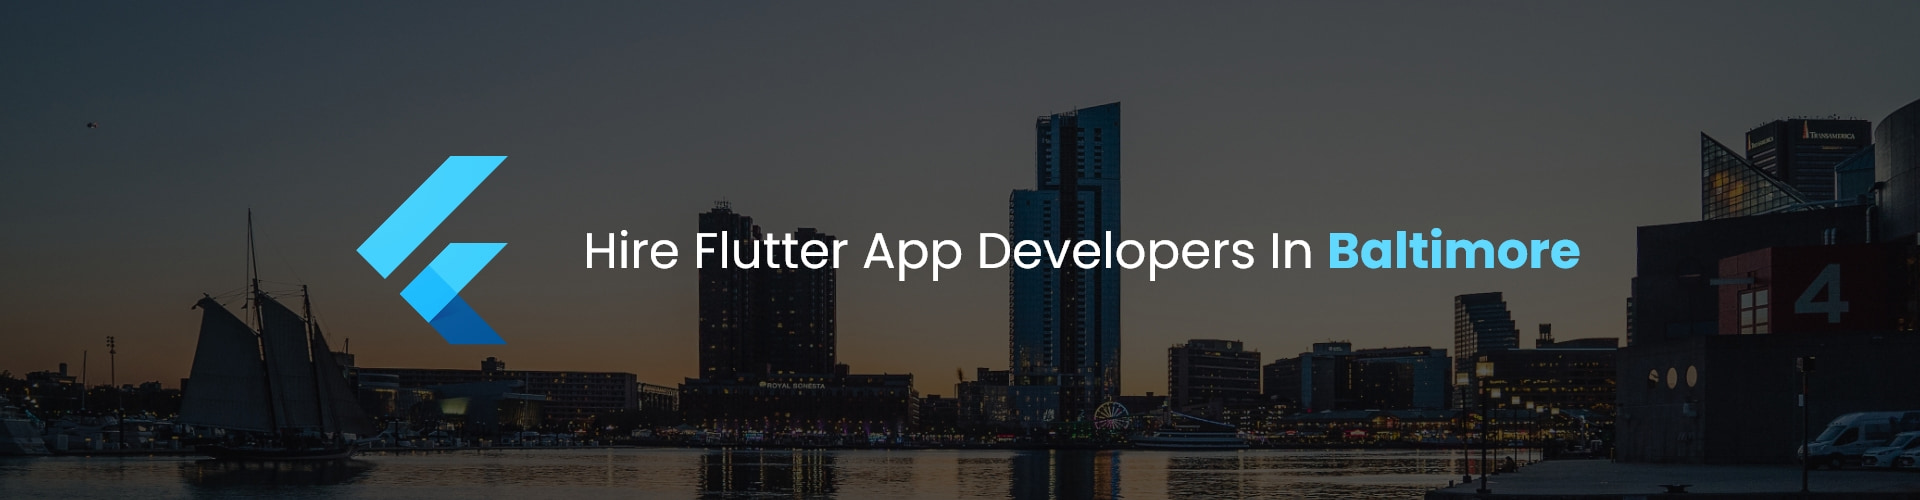 hire flutter app developers in baltimore